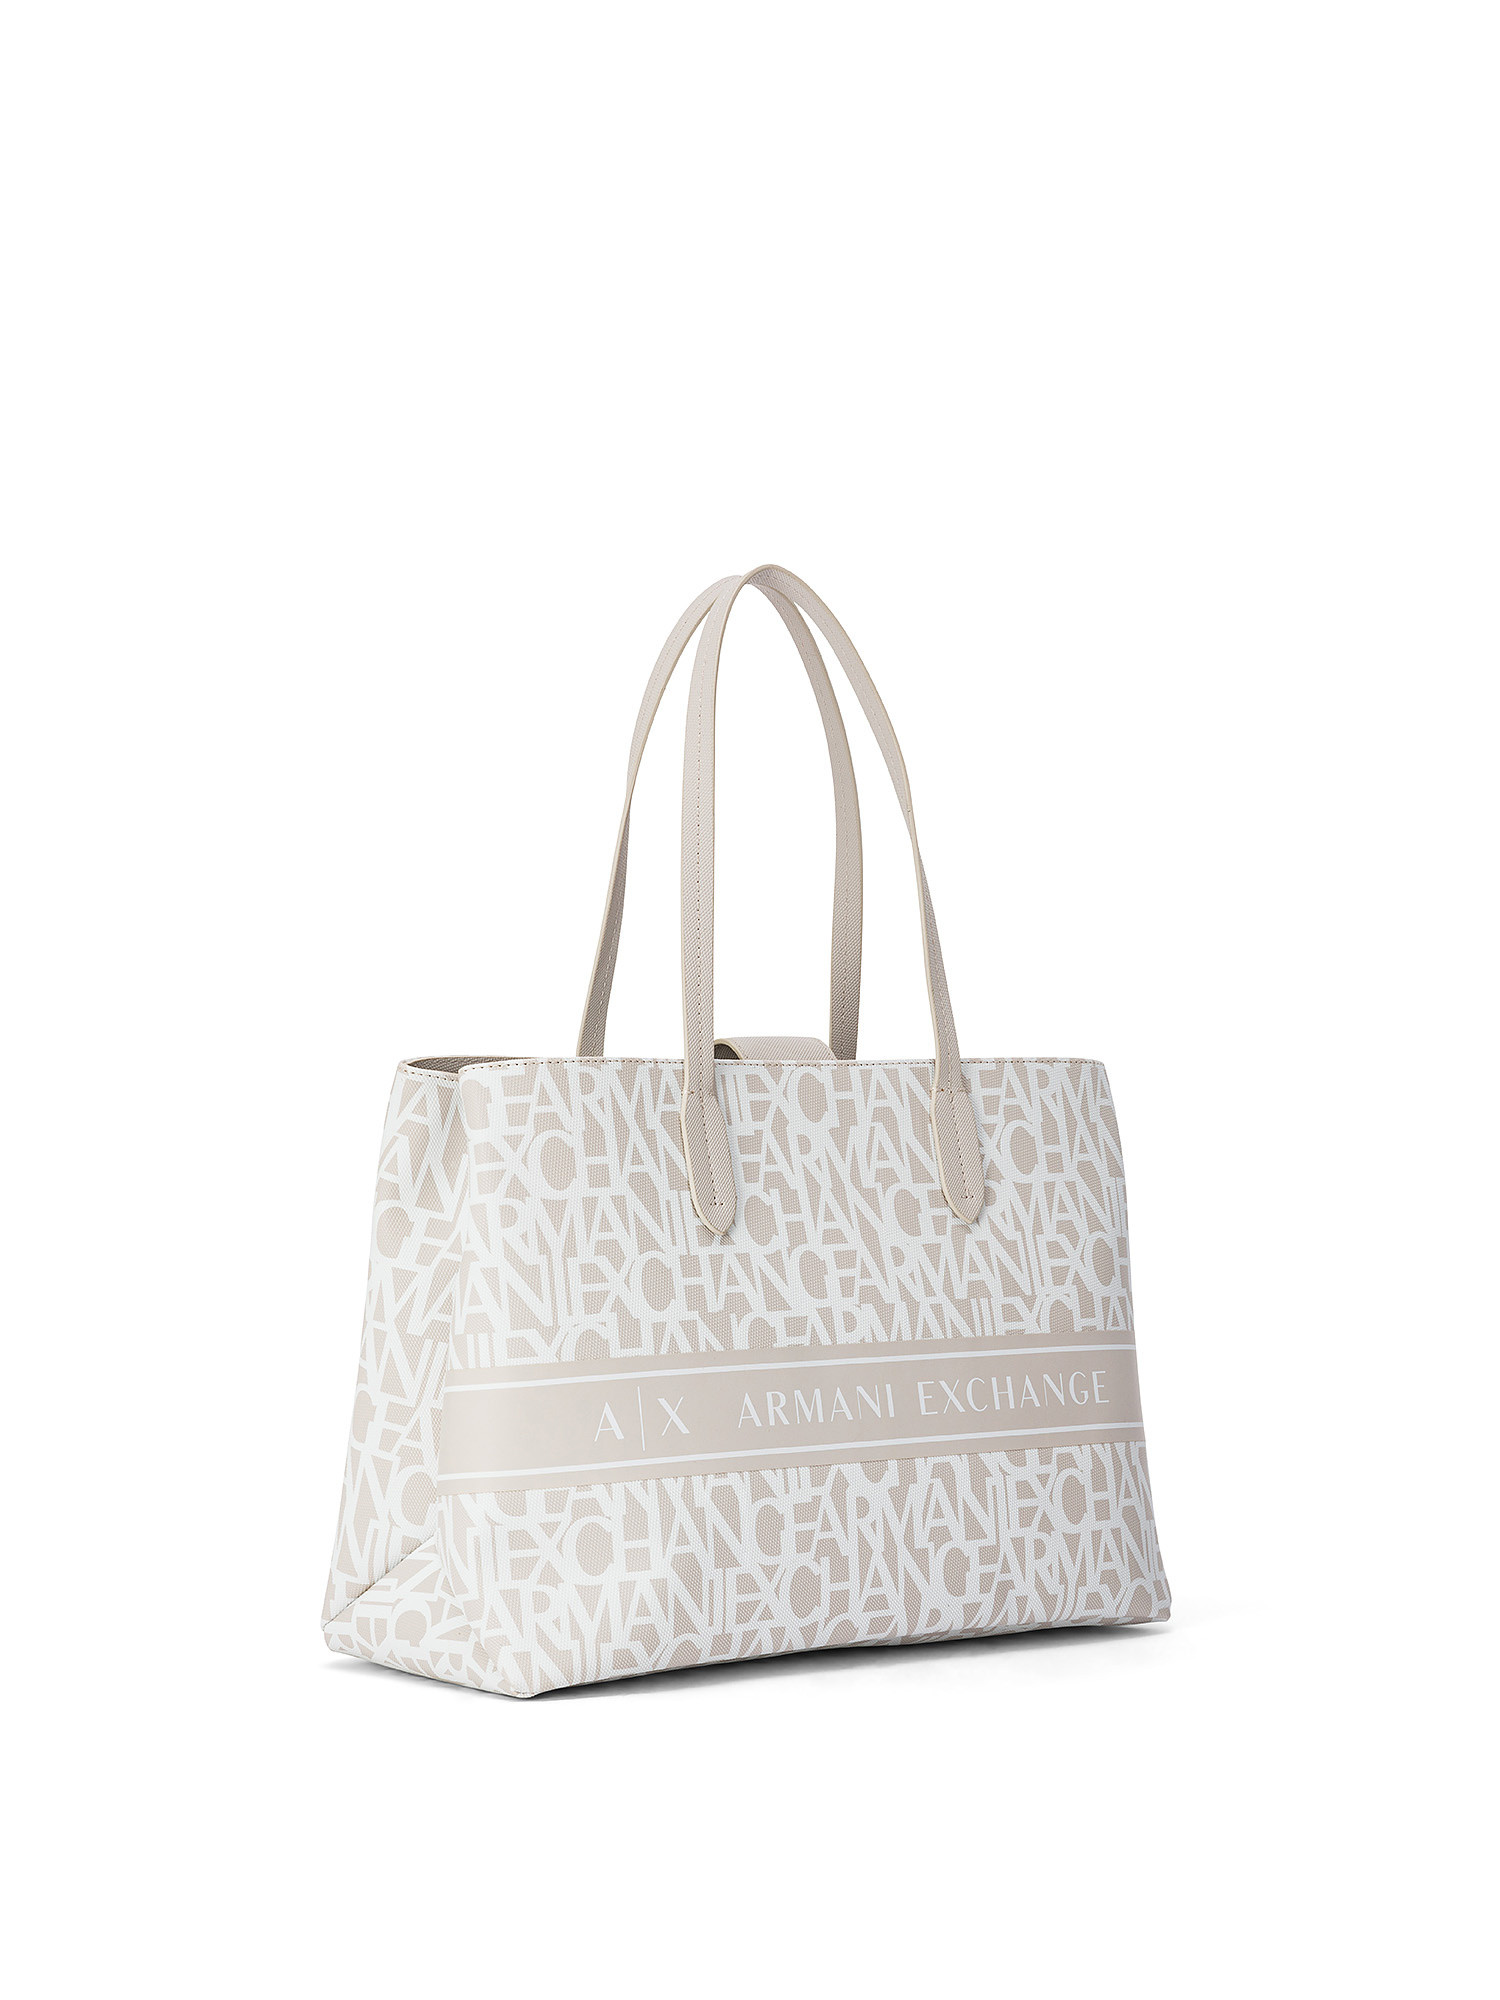 Armani Exchange - Tote bag con logo, Bianco ghiaccio, large image number 1